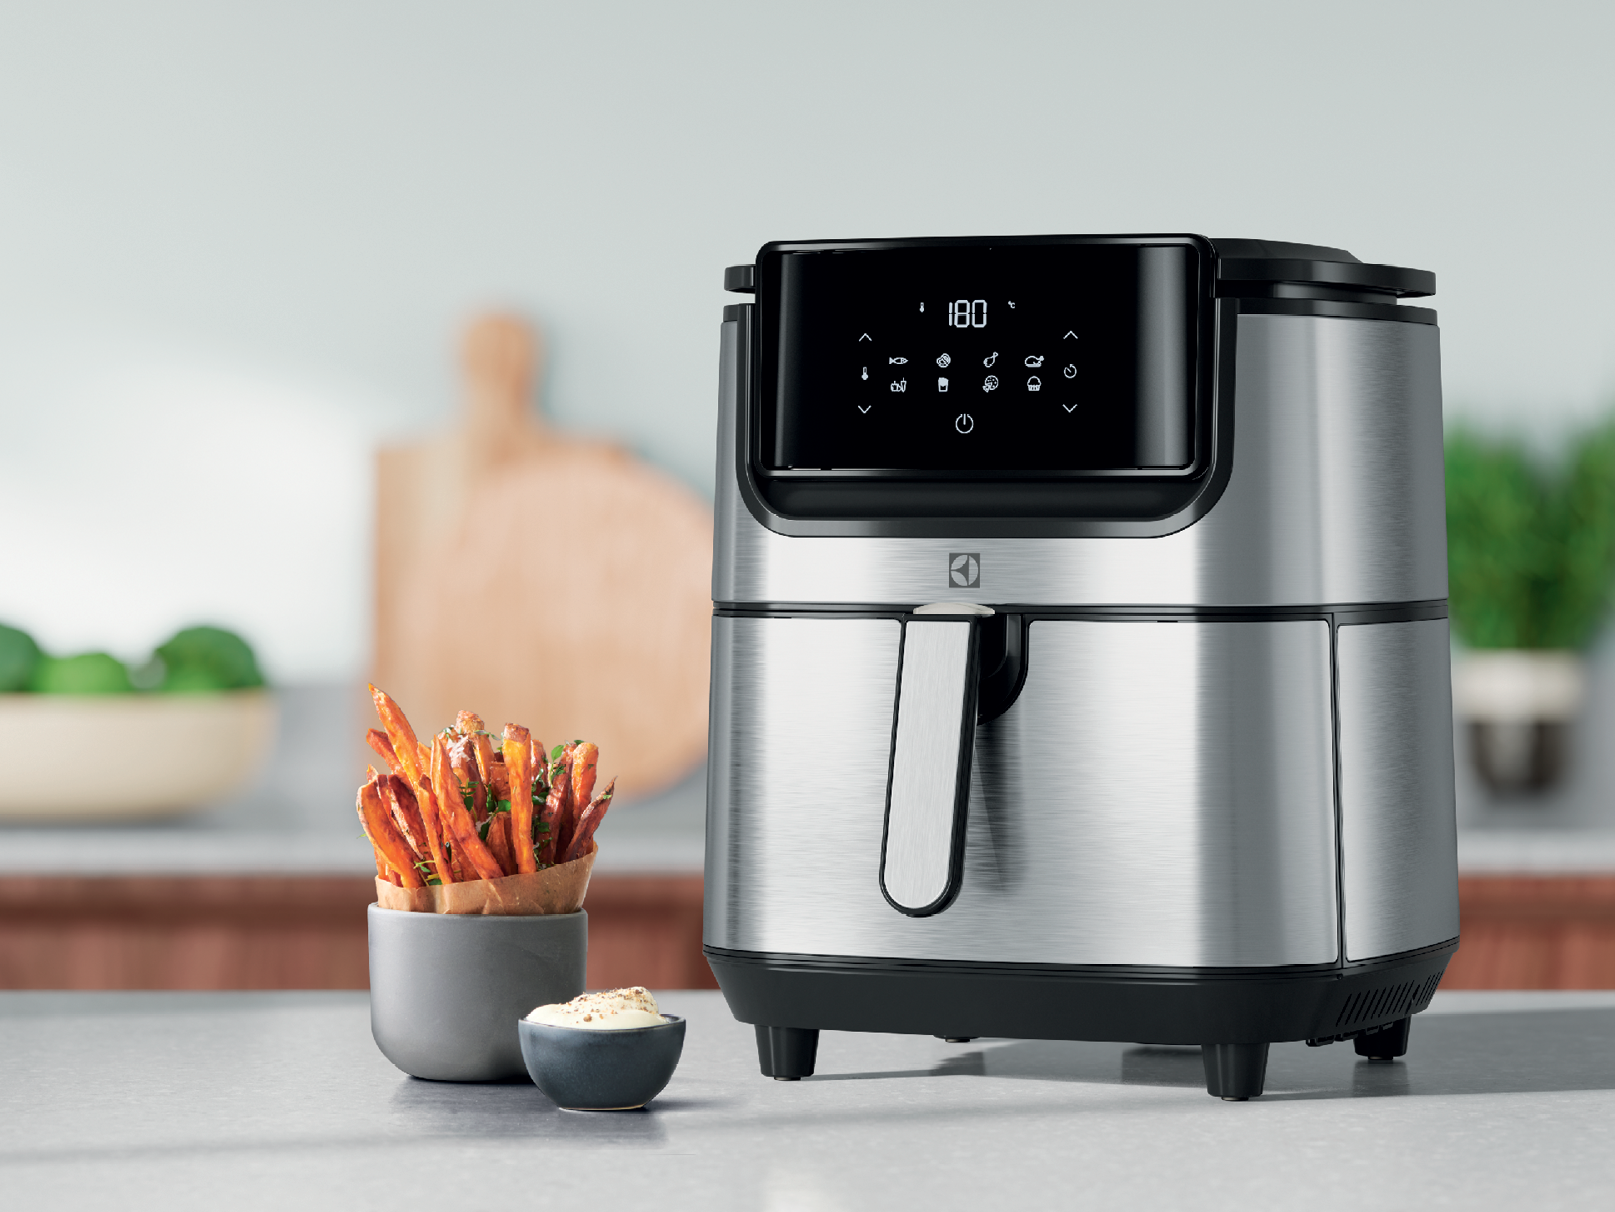 Мультипіч Electrolux Explore 6 Air Fryer  – смажте продукти корисно та смачно